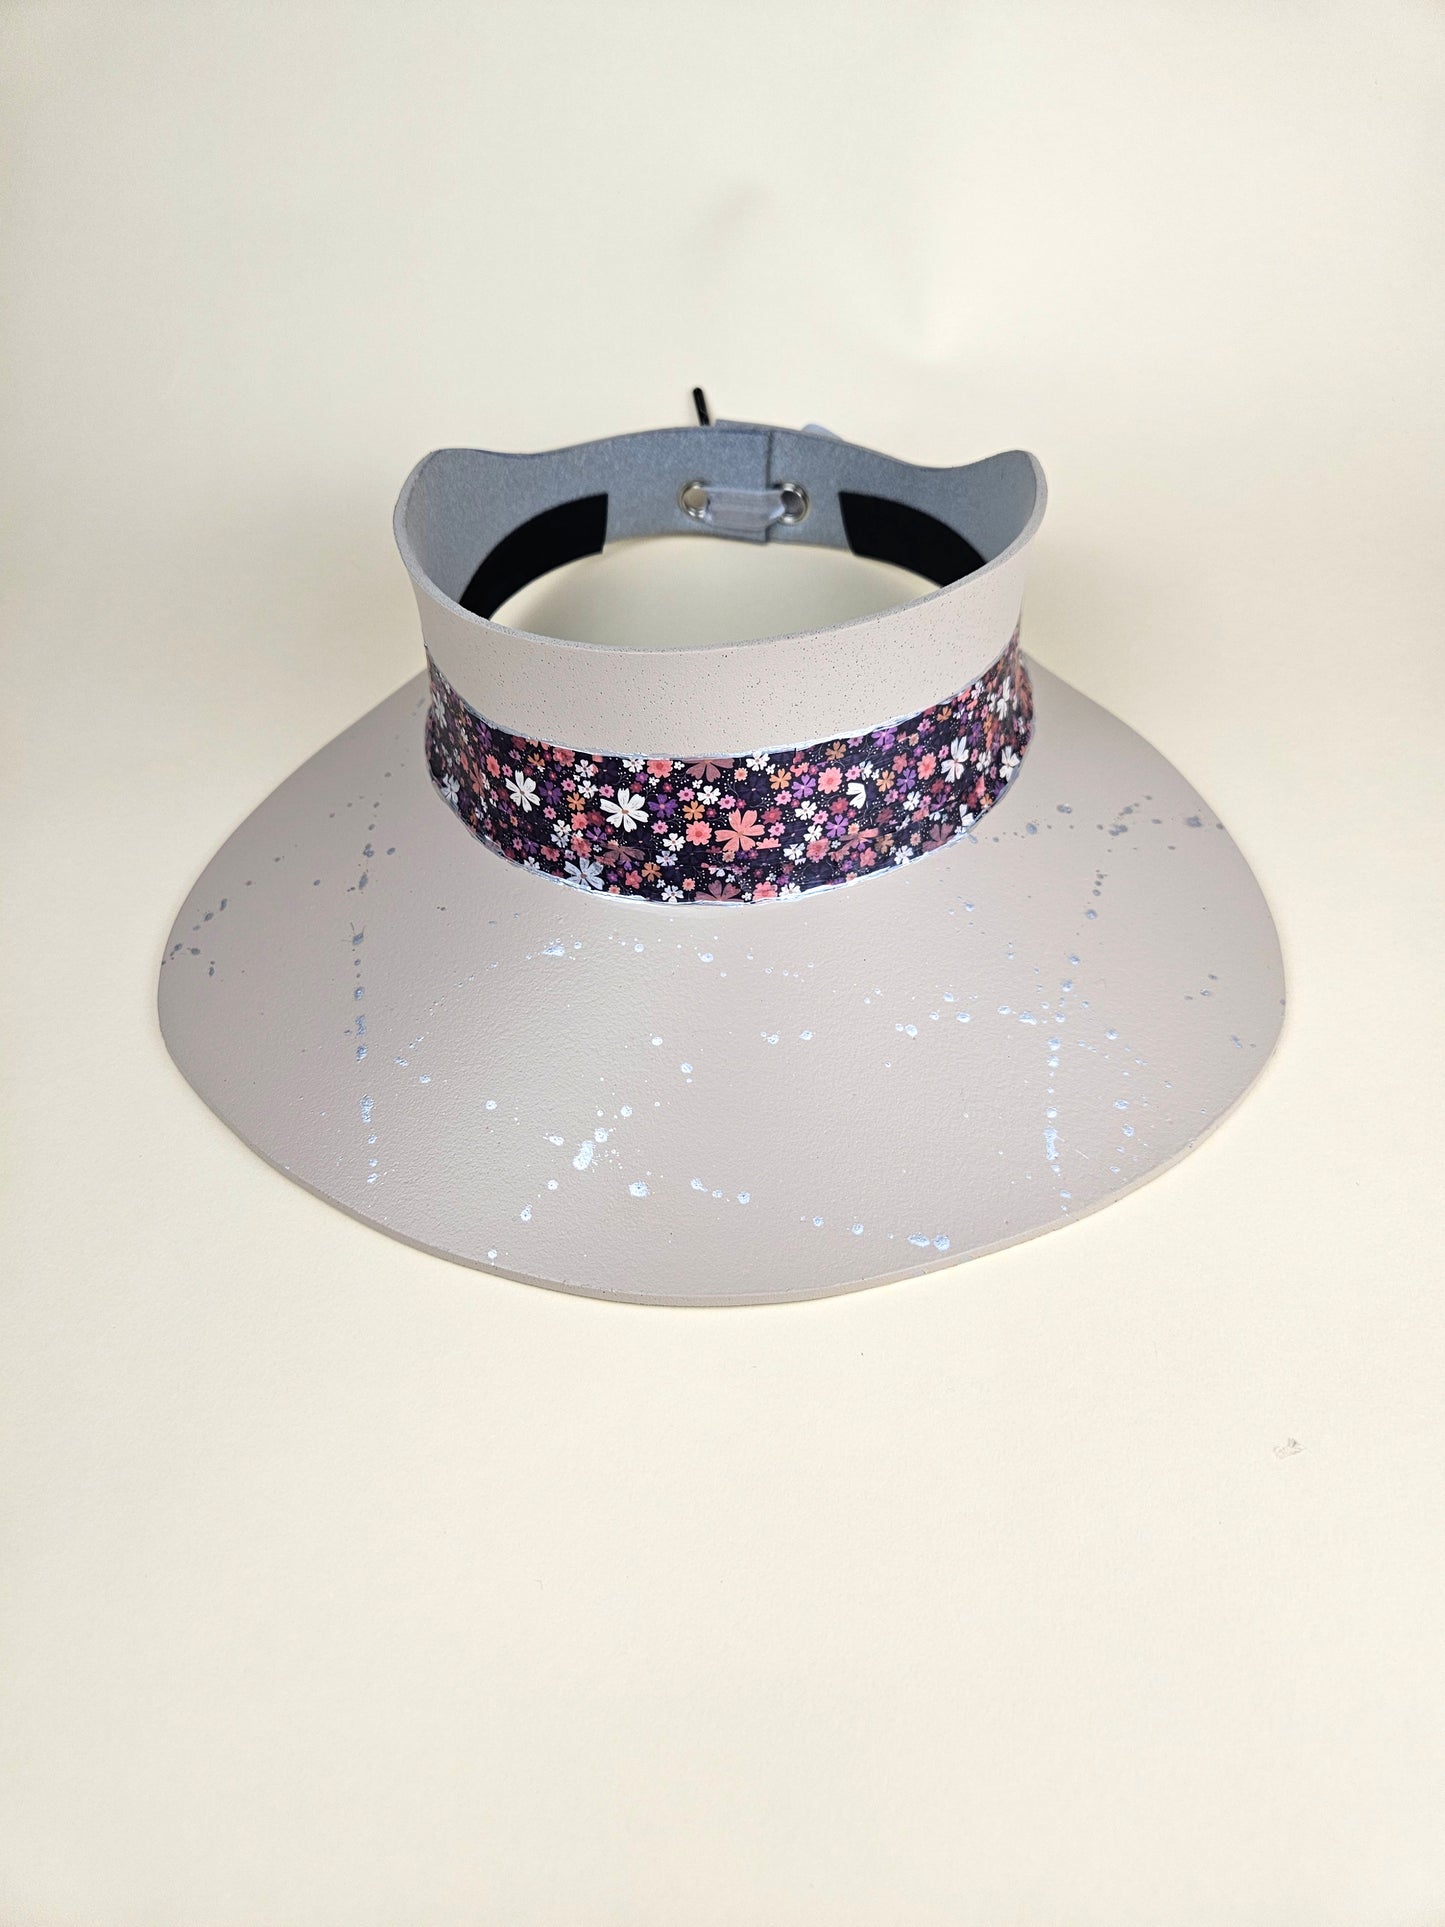 Peach Gray Audrey Sun Visor Hat with Multicolor Pinks and Purple Floral Band and Silver Paint Splatter Effect: Tea, Walks, Brunch, Fancy, Golf, Summer, Church, No Headache, Beach